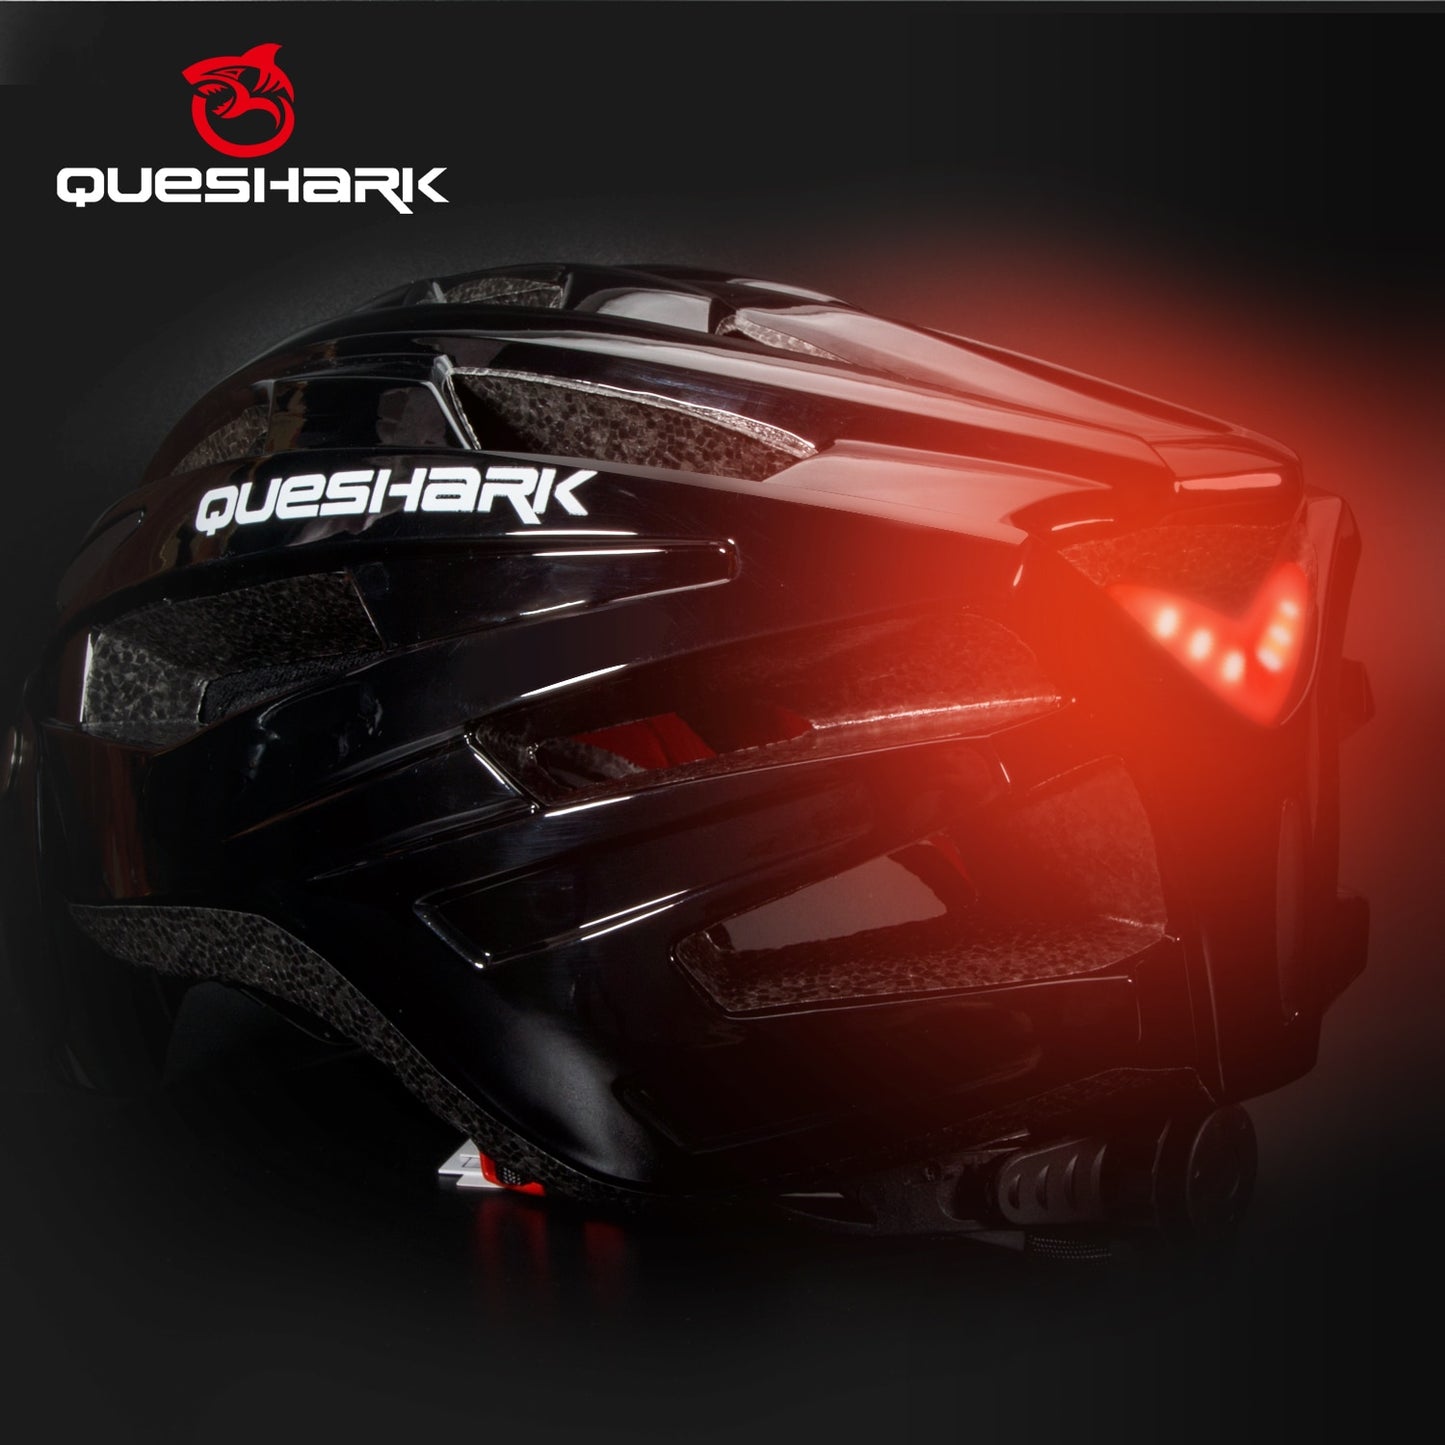 Queshark Led Light Cycling Helmet Road Mountain Bike Helmet Casco MTB Bicycle Helmet with Taillight Sport Safe Cap 58-64cm